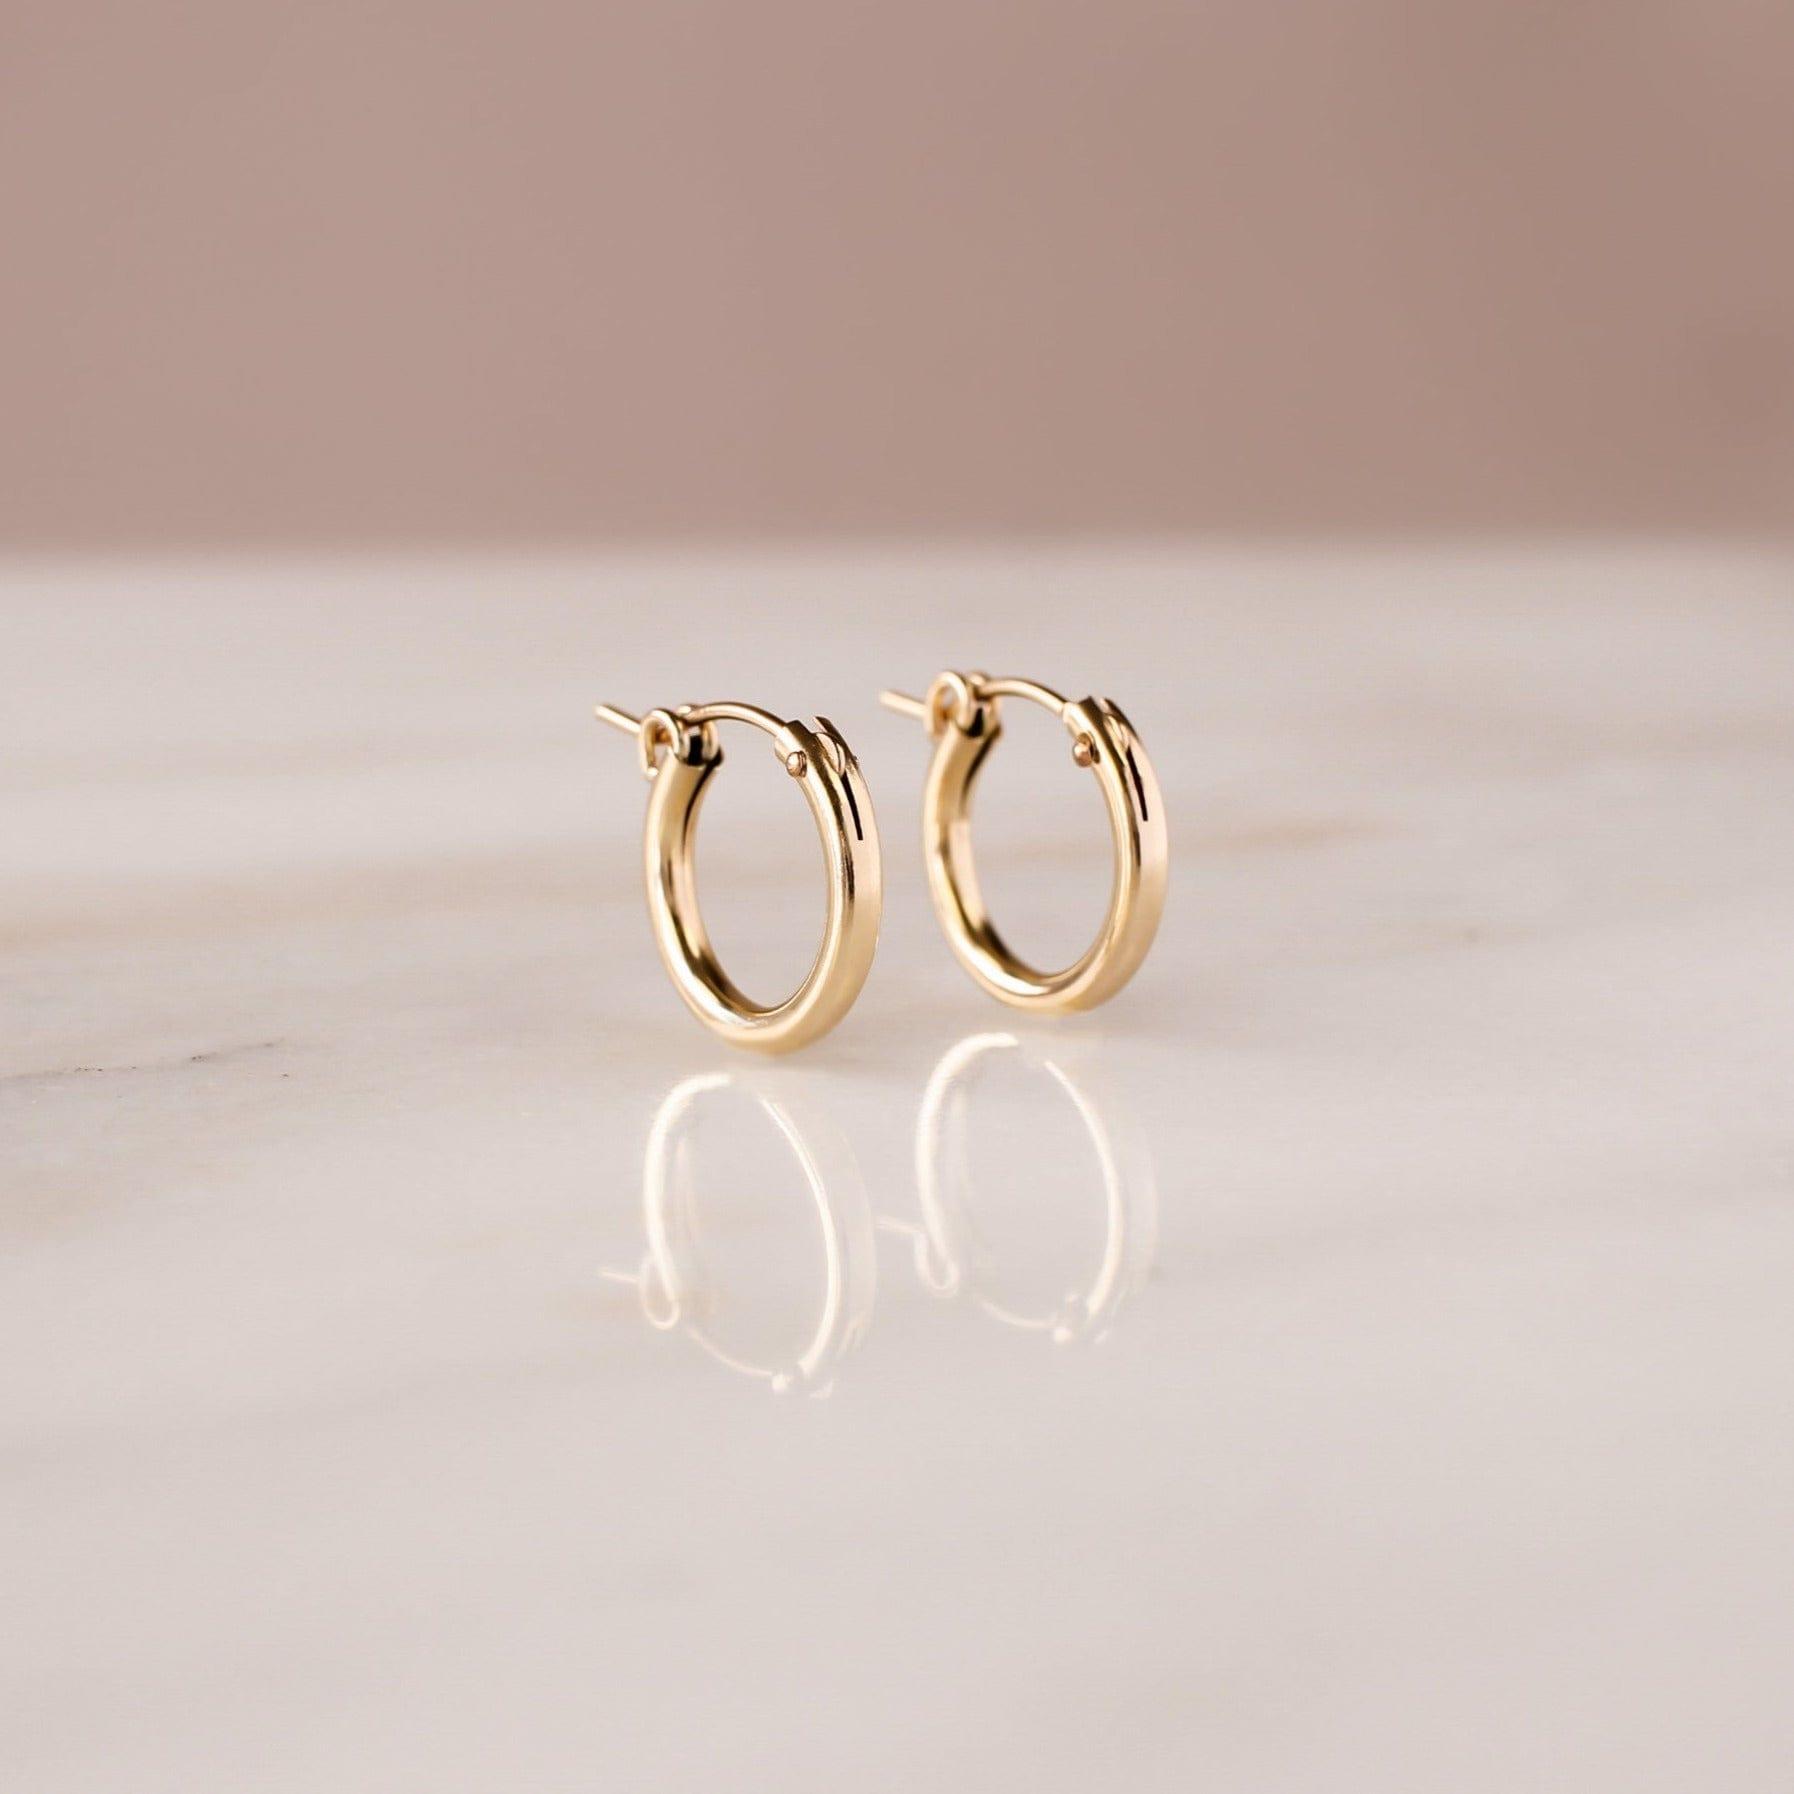 Jane Hoop Earrings - Nolia Jewelry - Meaningful + Sustainably Handcrafted Jewelry